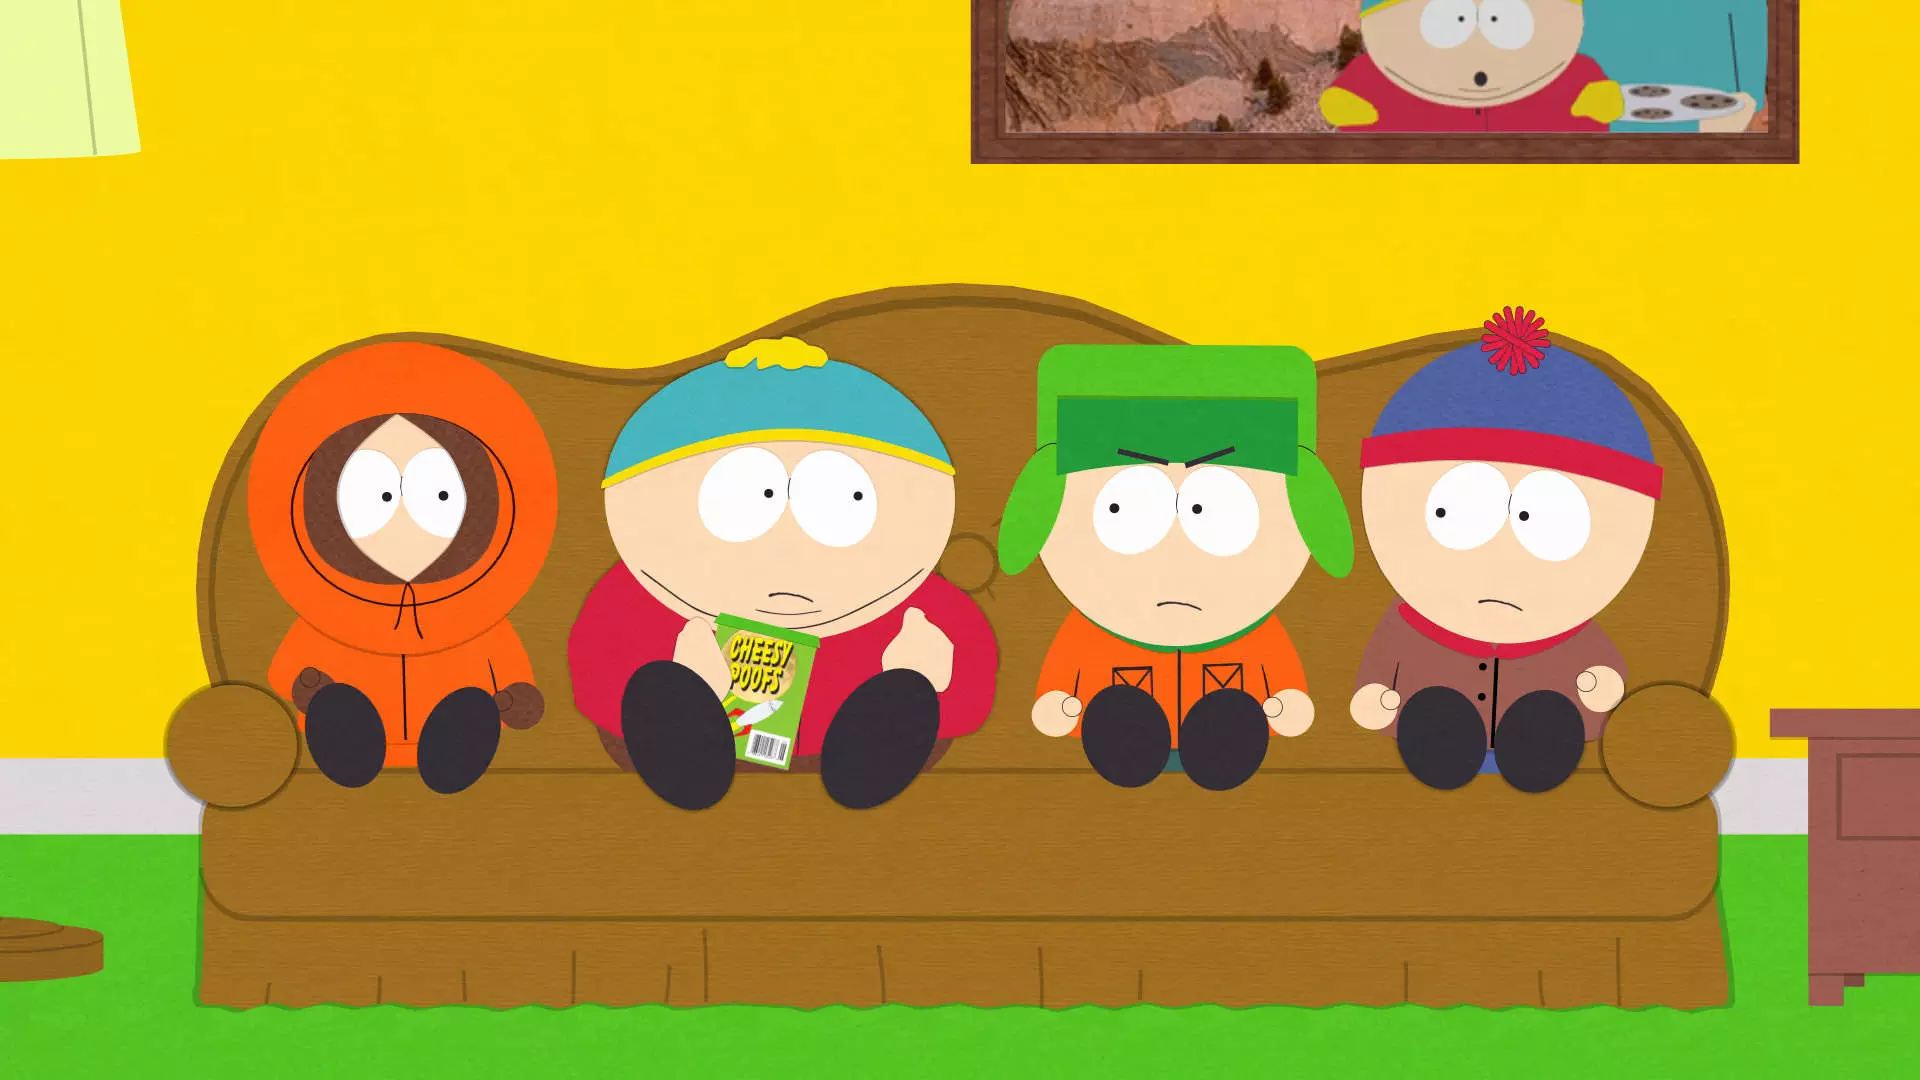 شخصیت های سریال South Park روی کاناپه نشسته اند